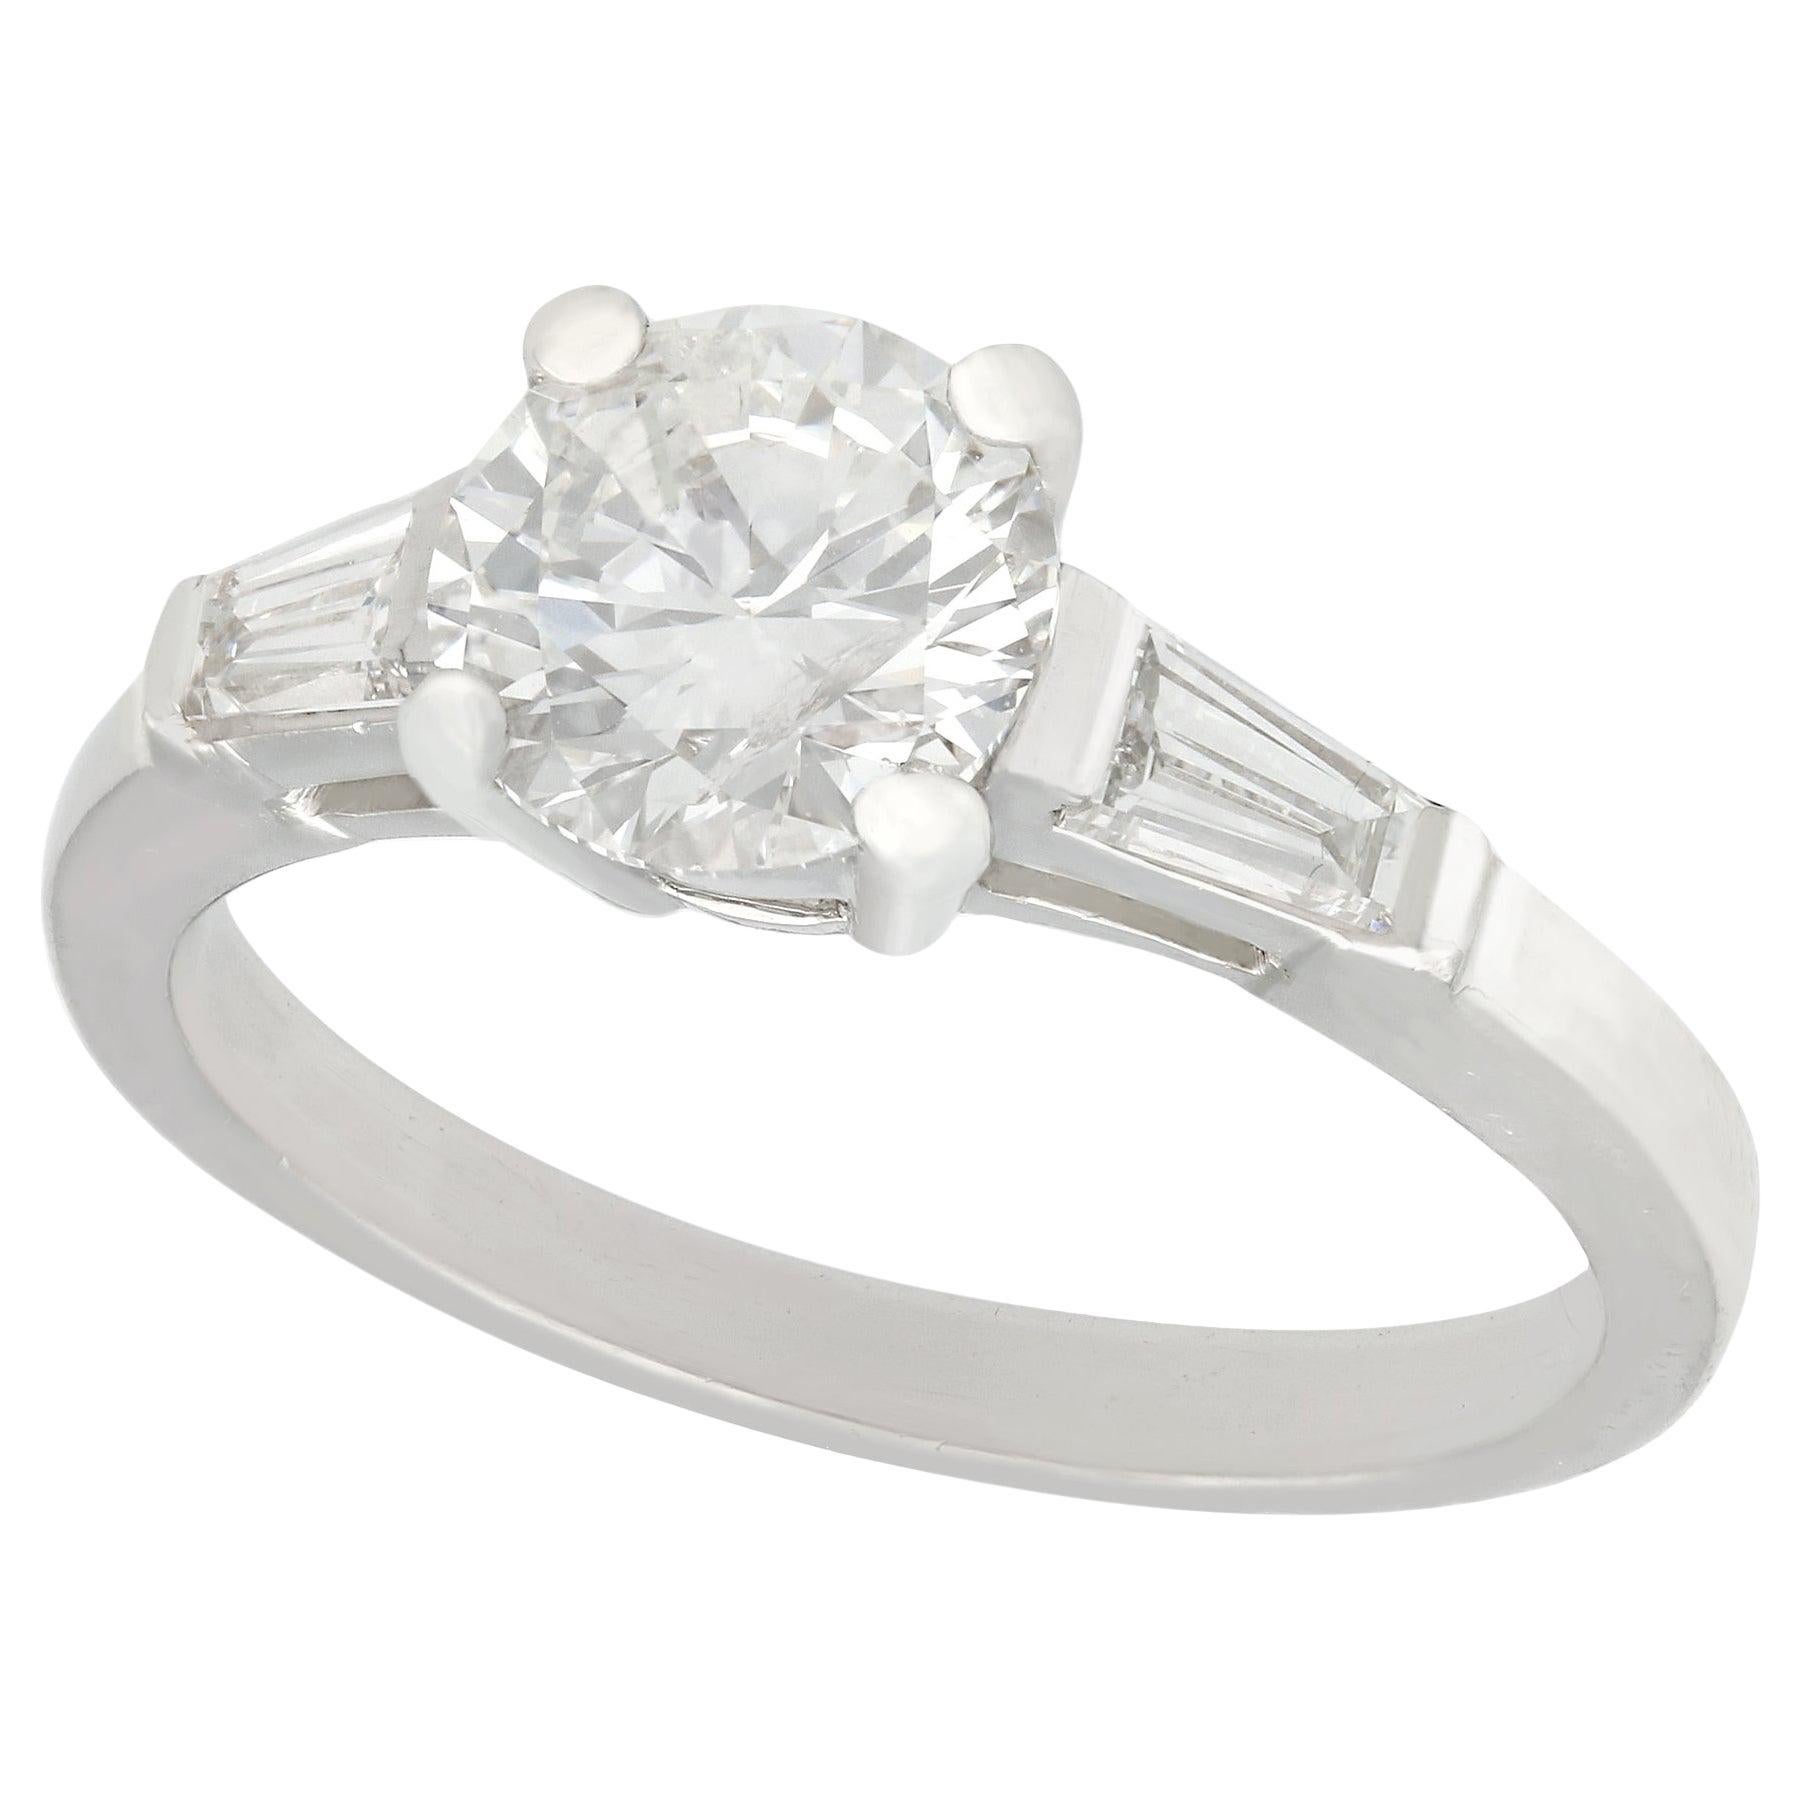 Vintage 1950s 1.32 Carat Diamond and Platinum Solitaire Engagement Ring